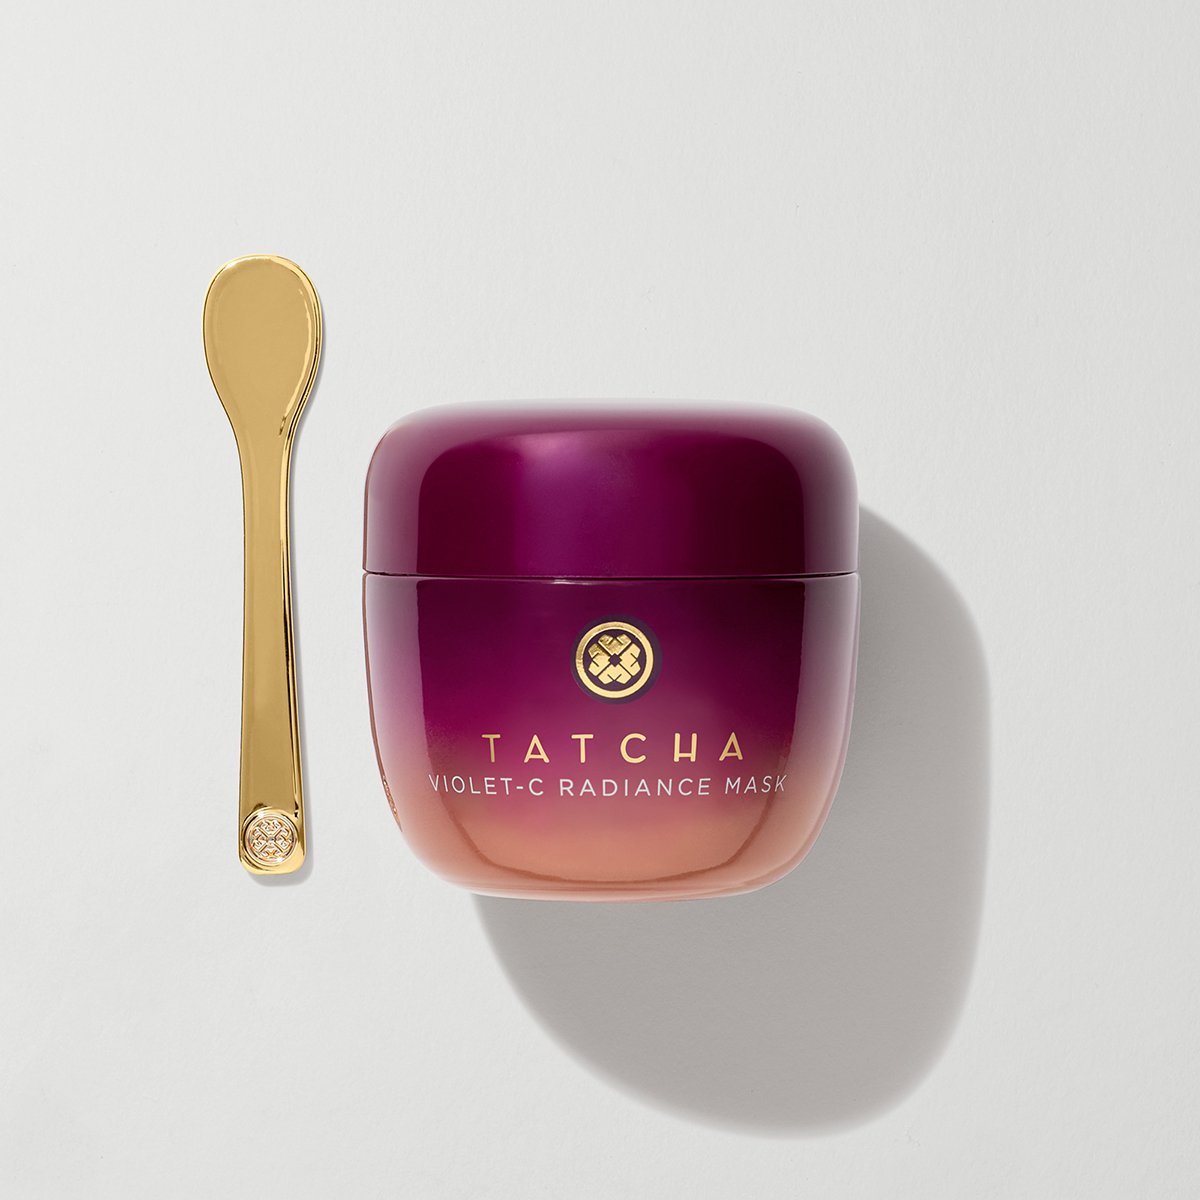 Shop Tatcha Violet-c Radiance Mask - Vitamin C Brightening Mask